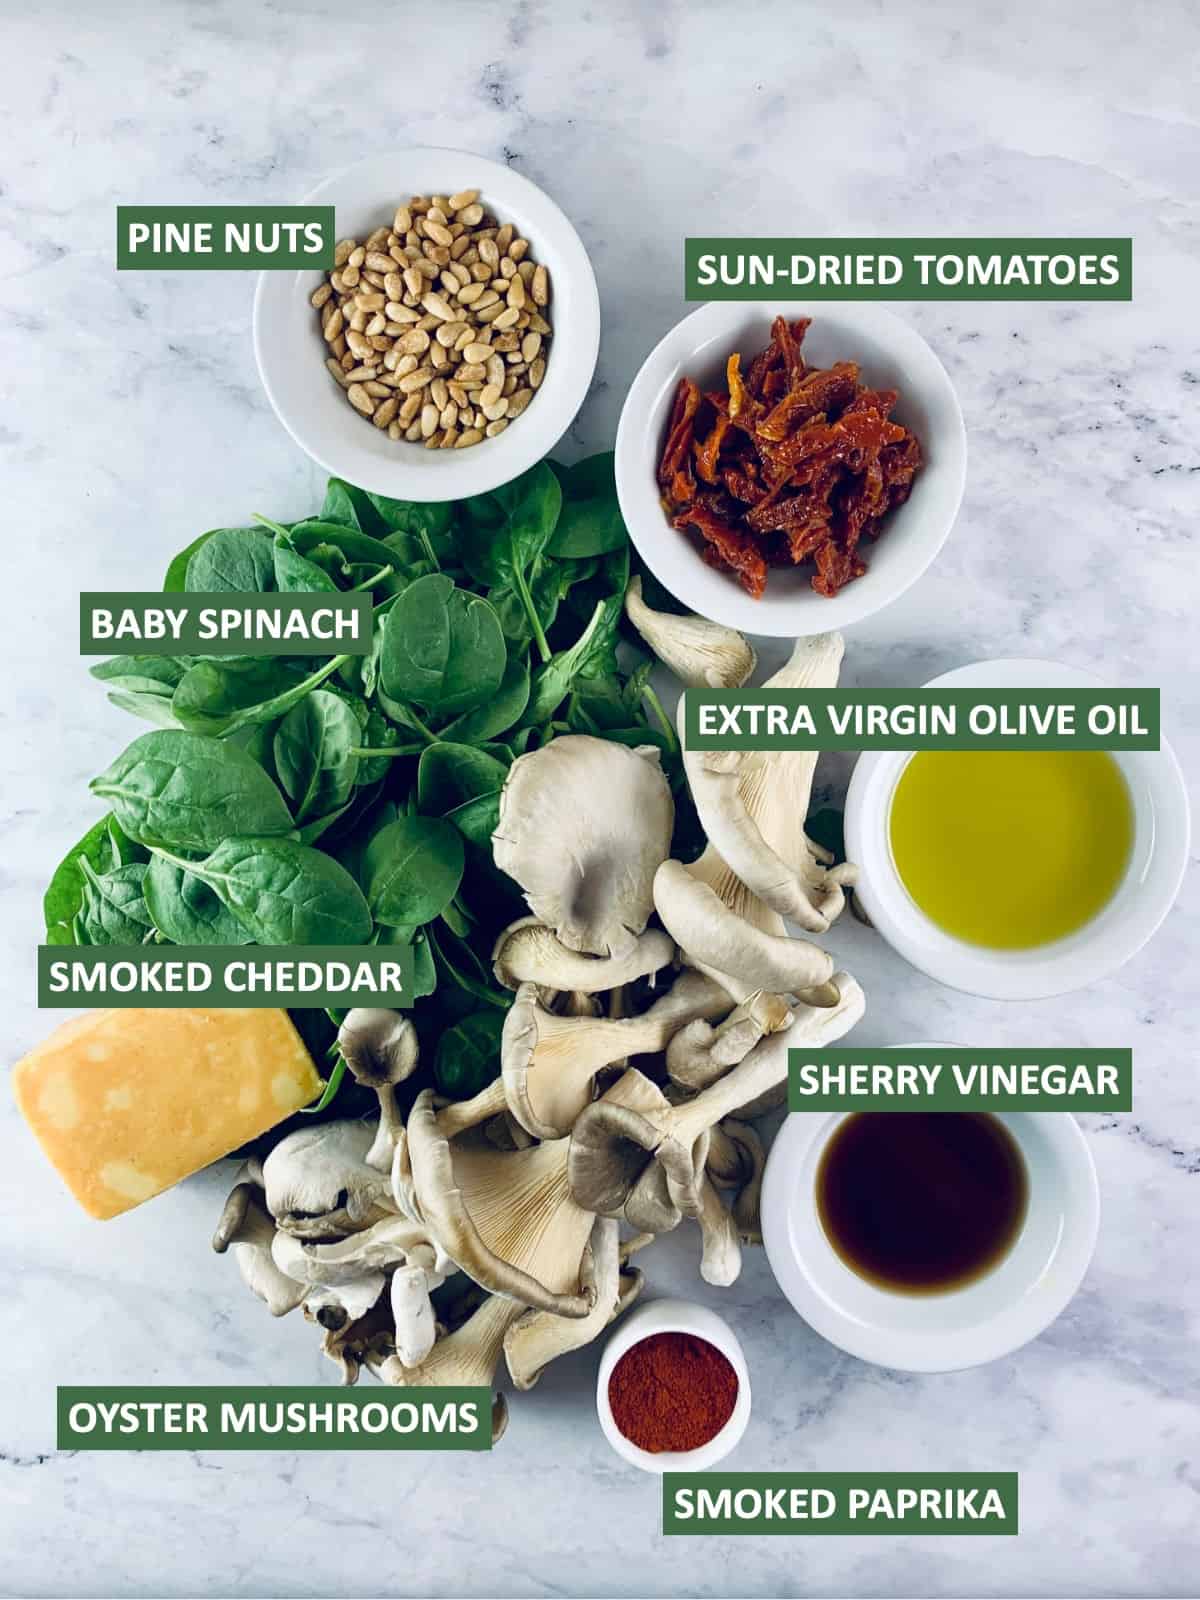 Labelled ingredients needed to make Oyster Mushroom Salad.